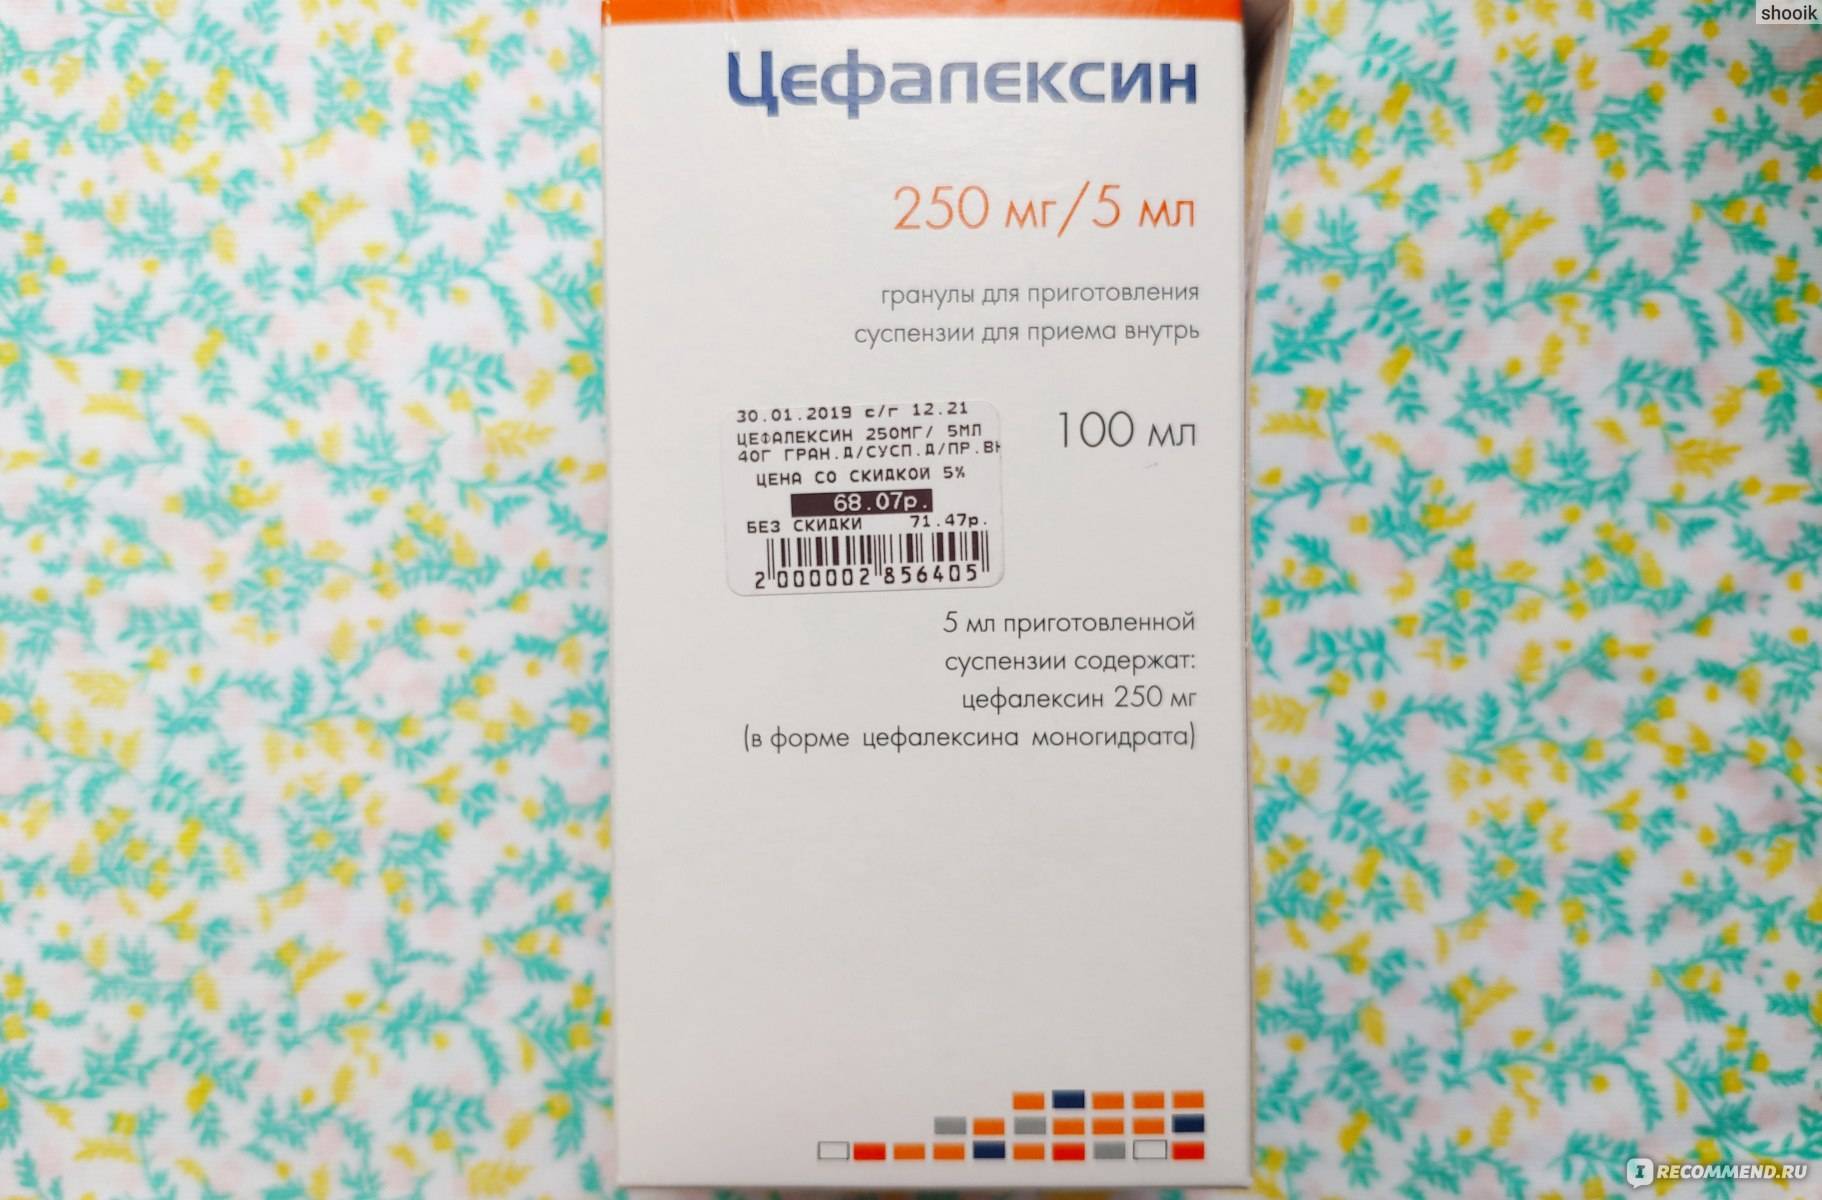 Суспензия для детей “цефалексин” 250 мг: инструкция по применению антибиотика, дозировка препарата